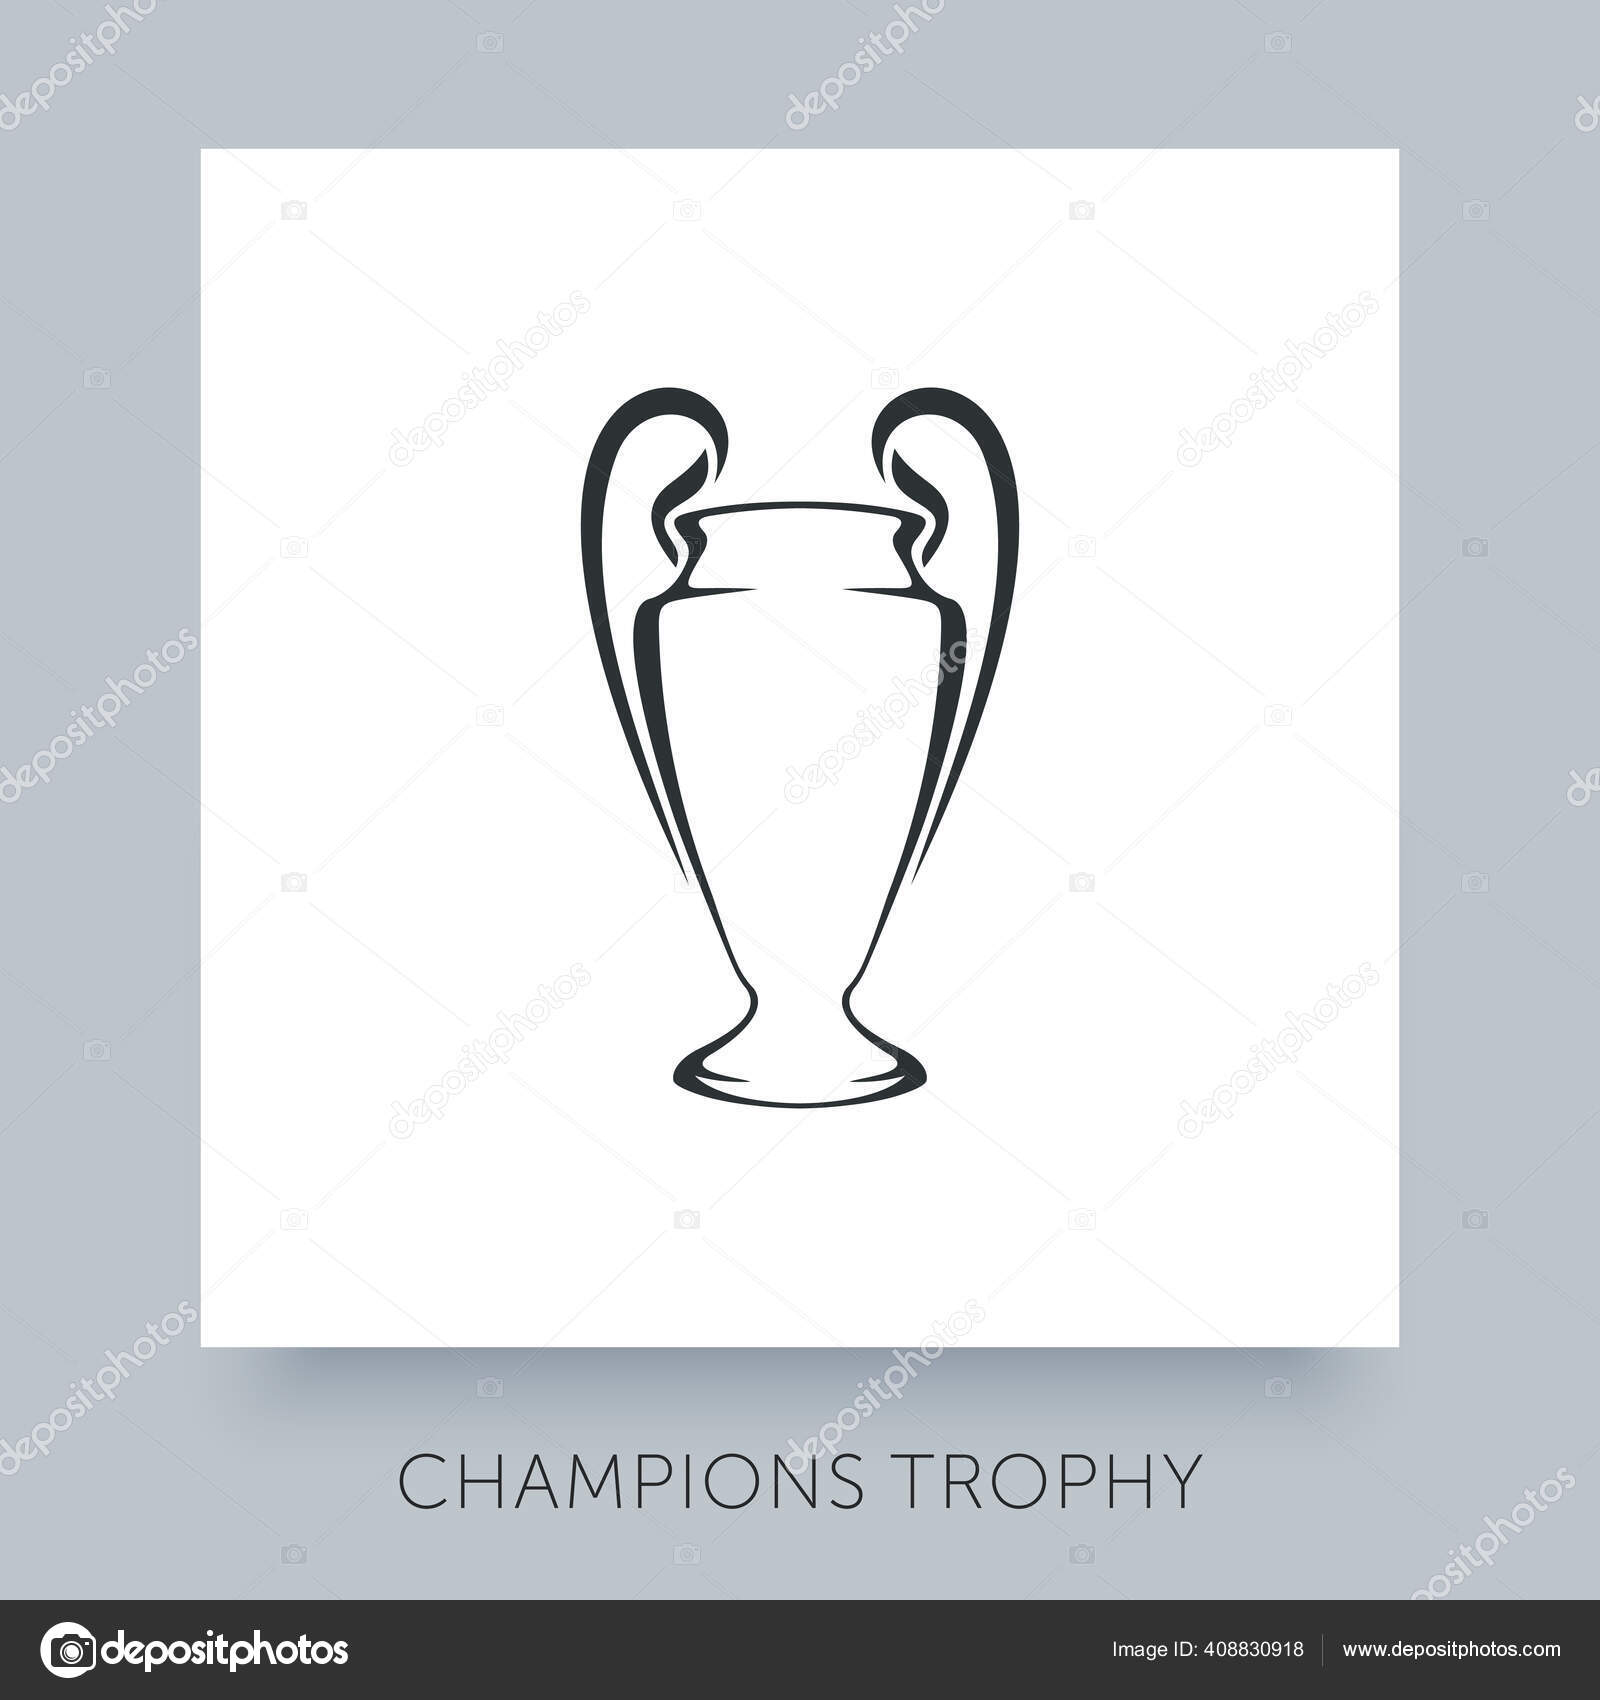 Champions League Trophy Icon vector de Stock